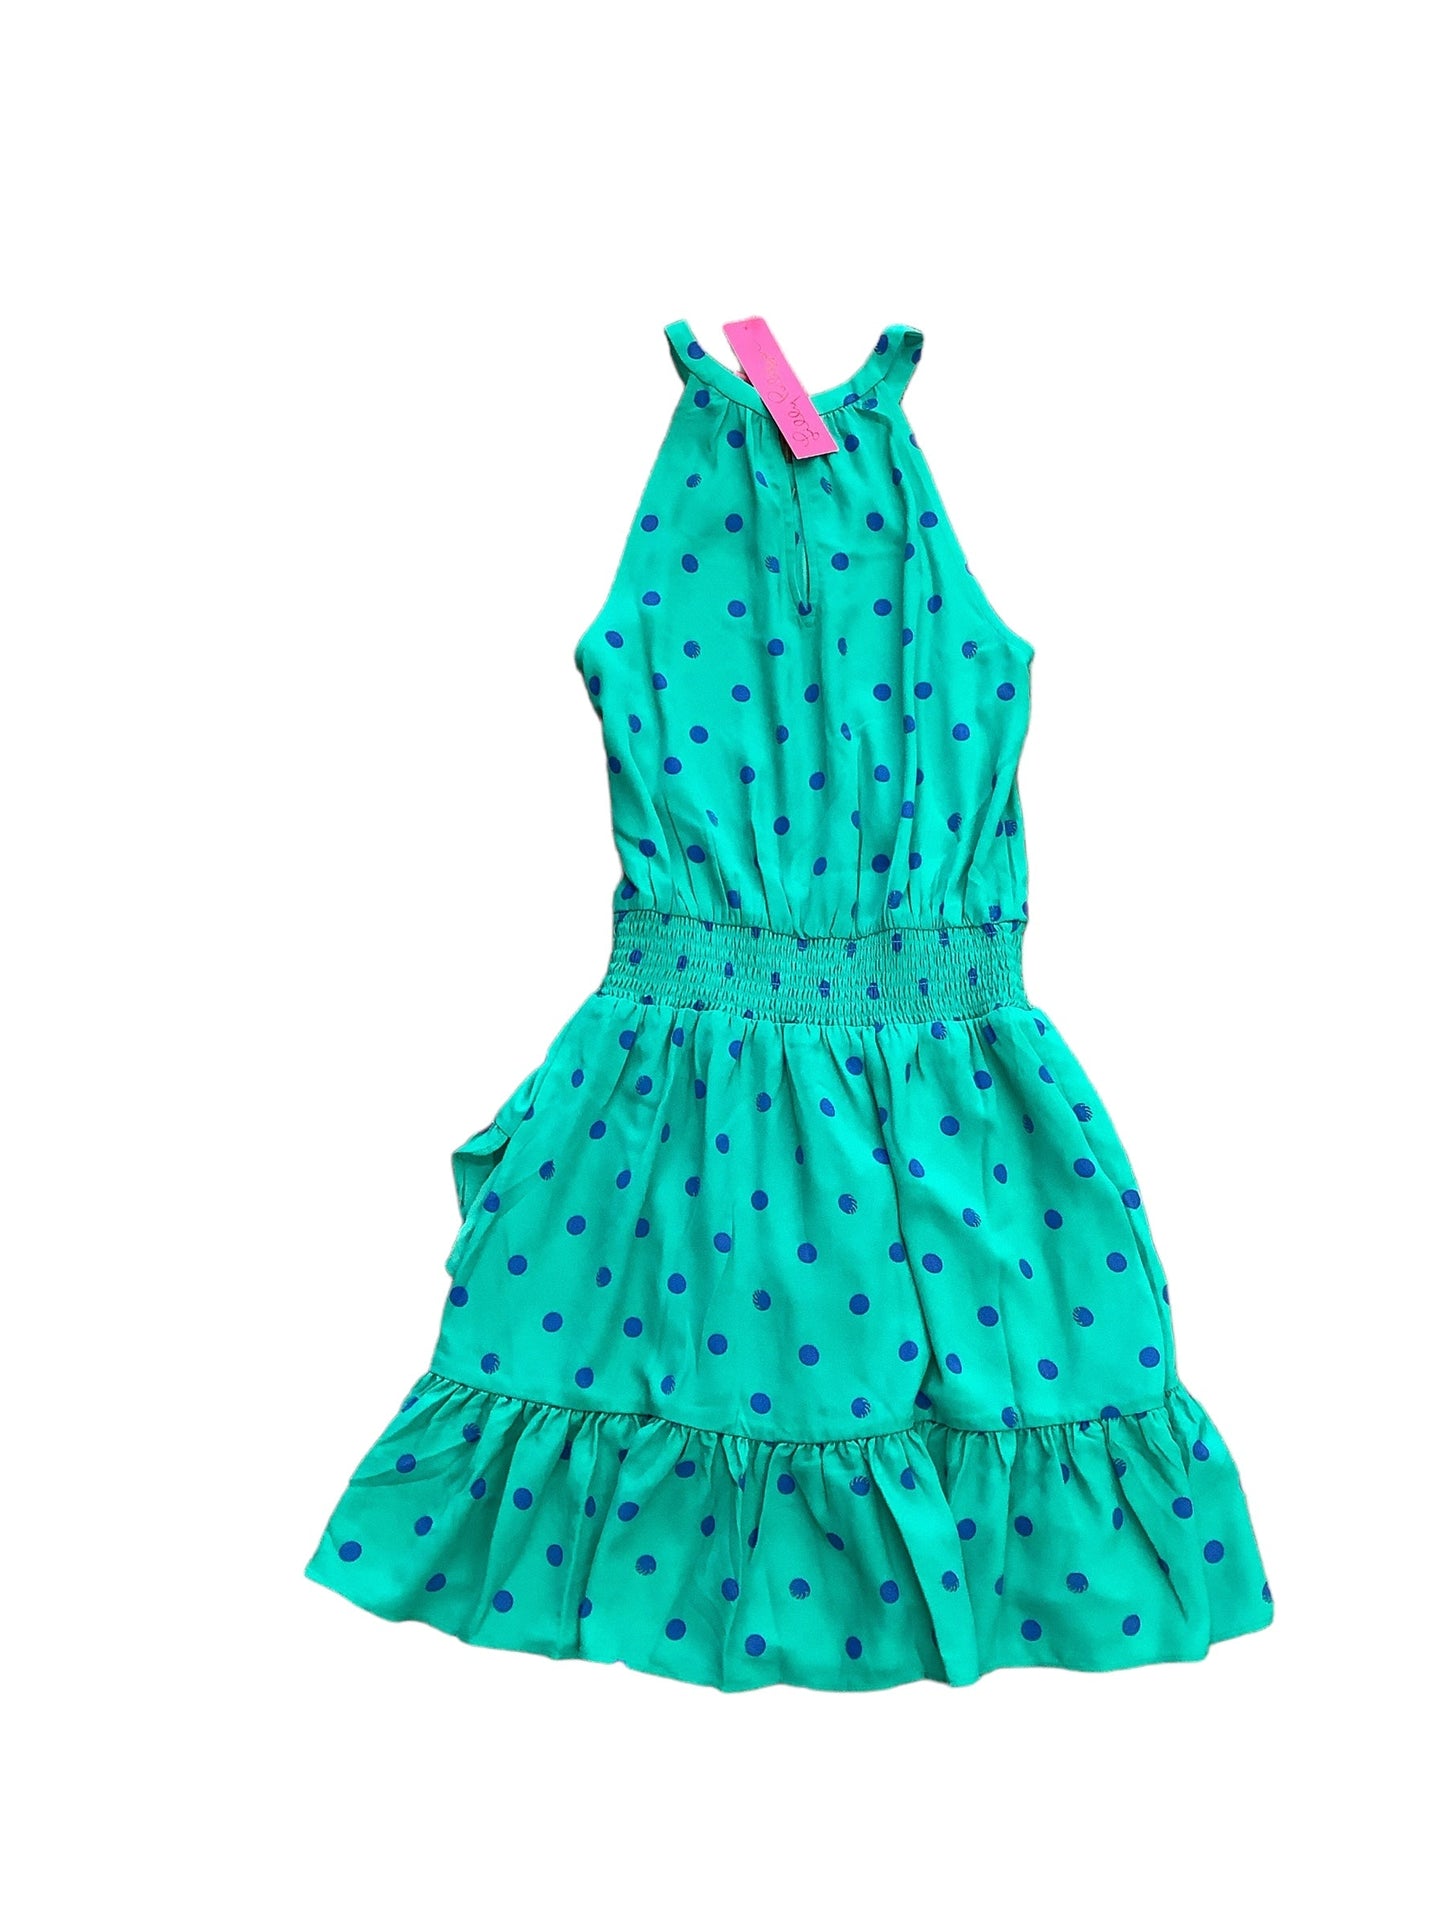 Green Dress Designer Lilly Pulitzer, Size 2